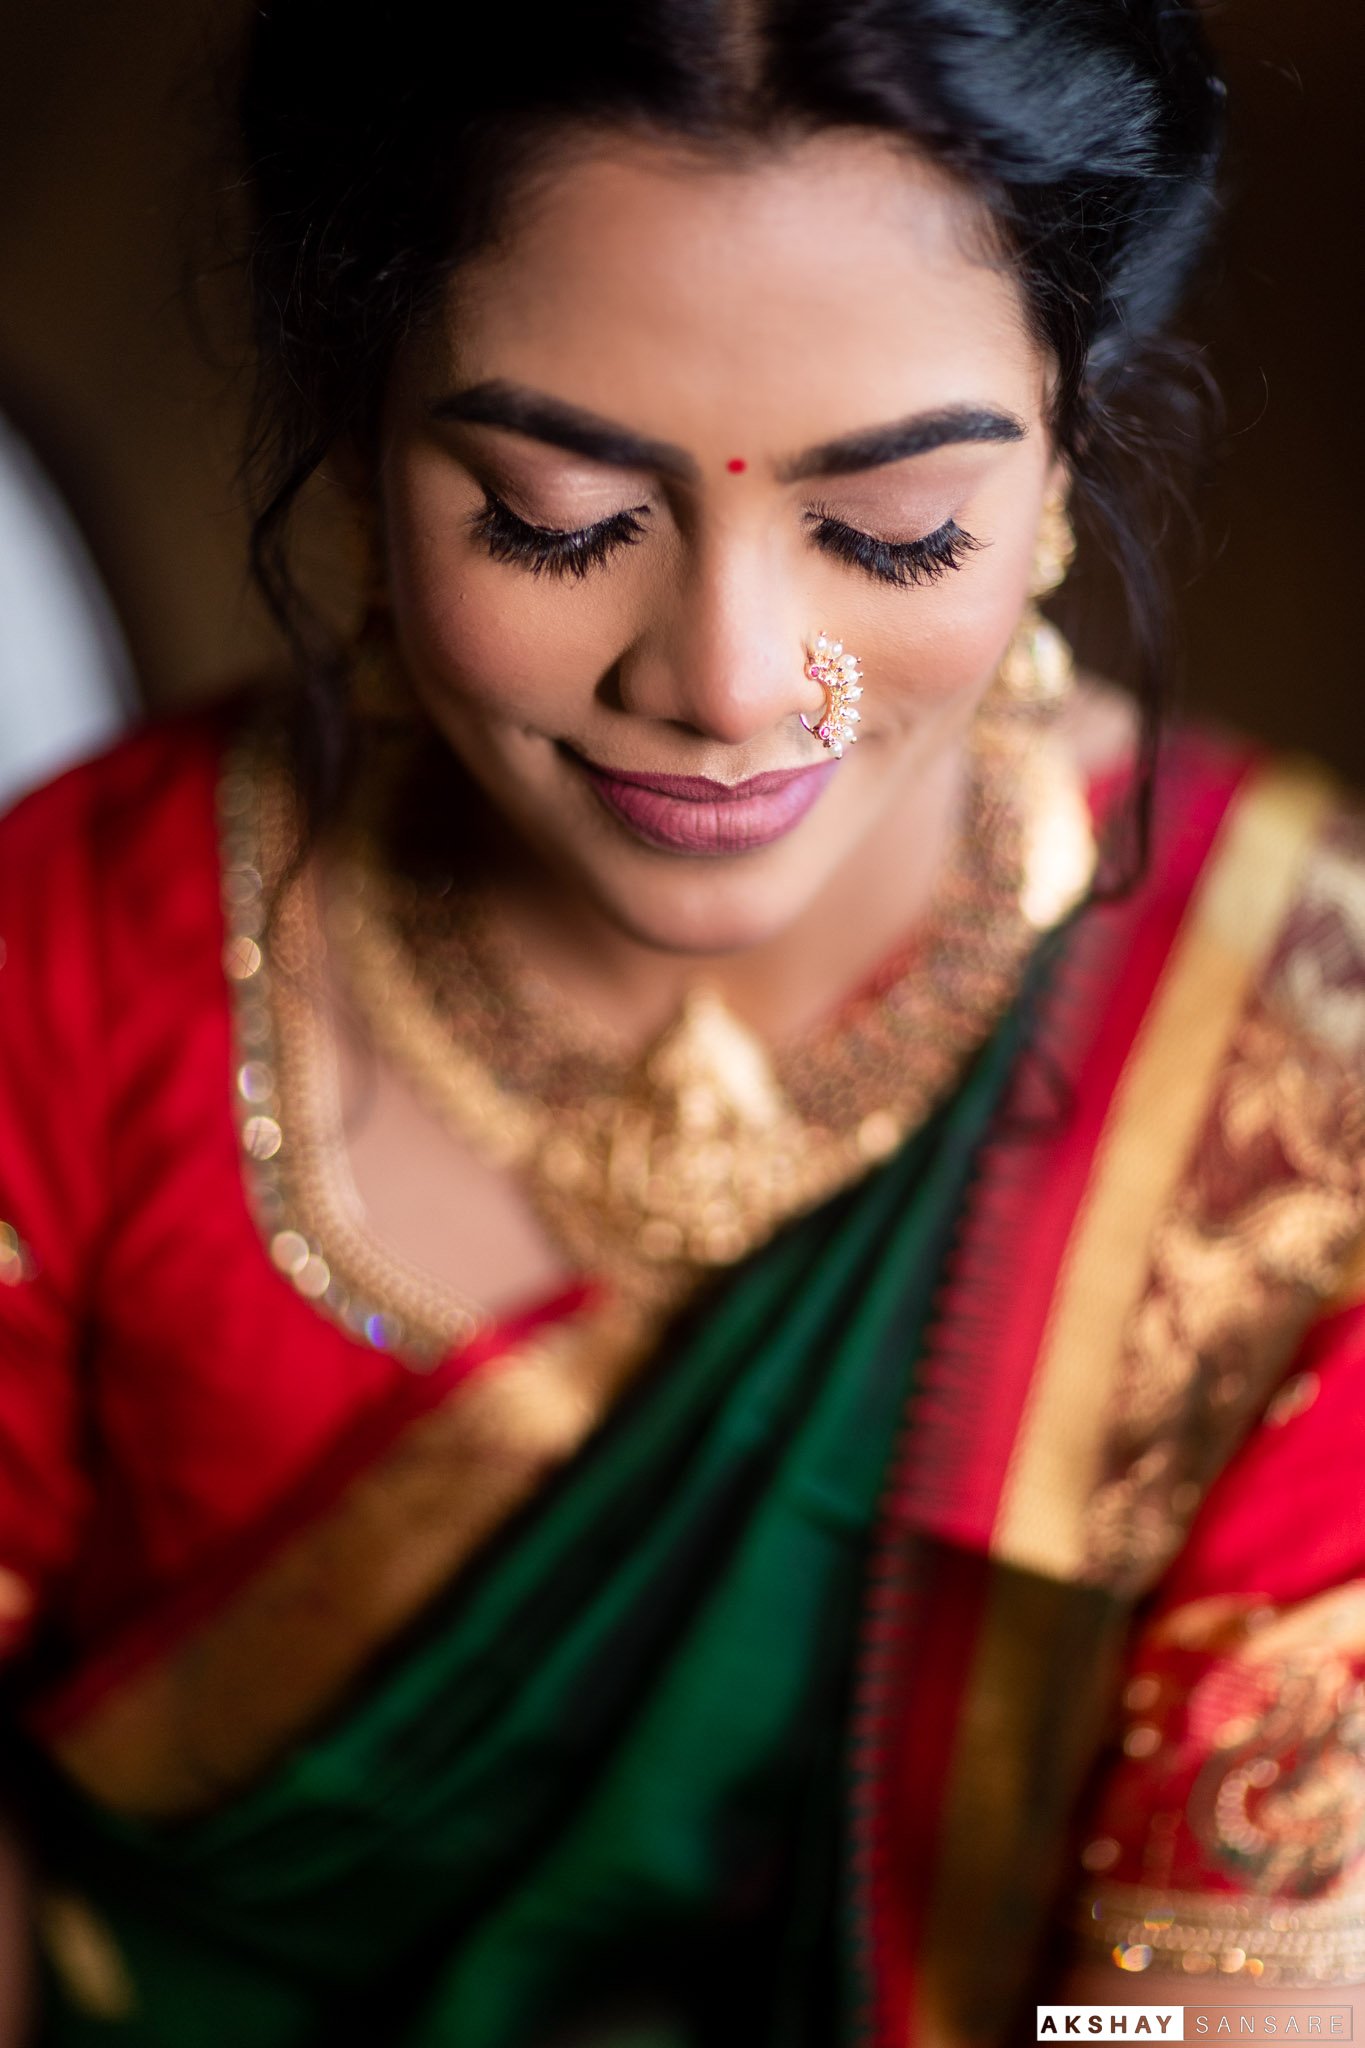 Sriraj x Pranali engagement compress | Akshay Sansare Photography -1.jpg